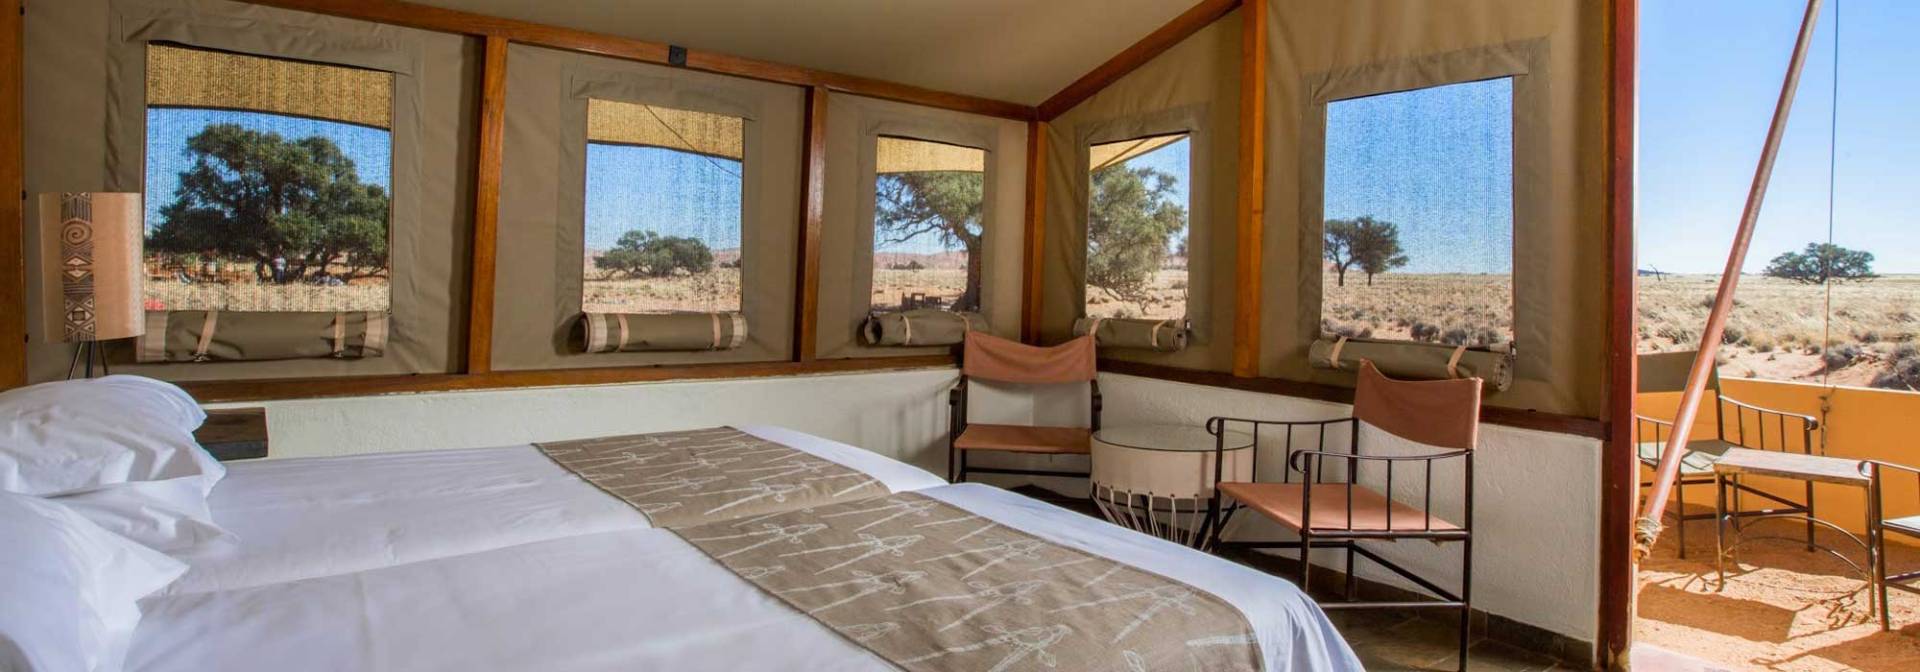 Tented camp in the Namib Desert